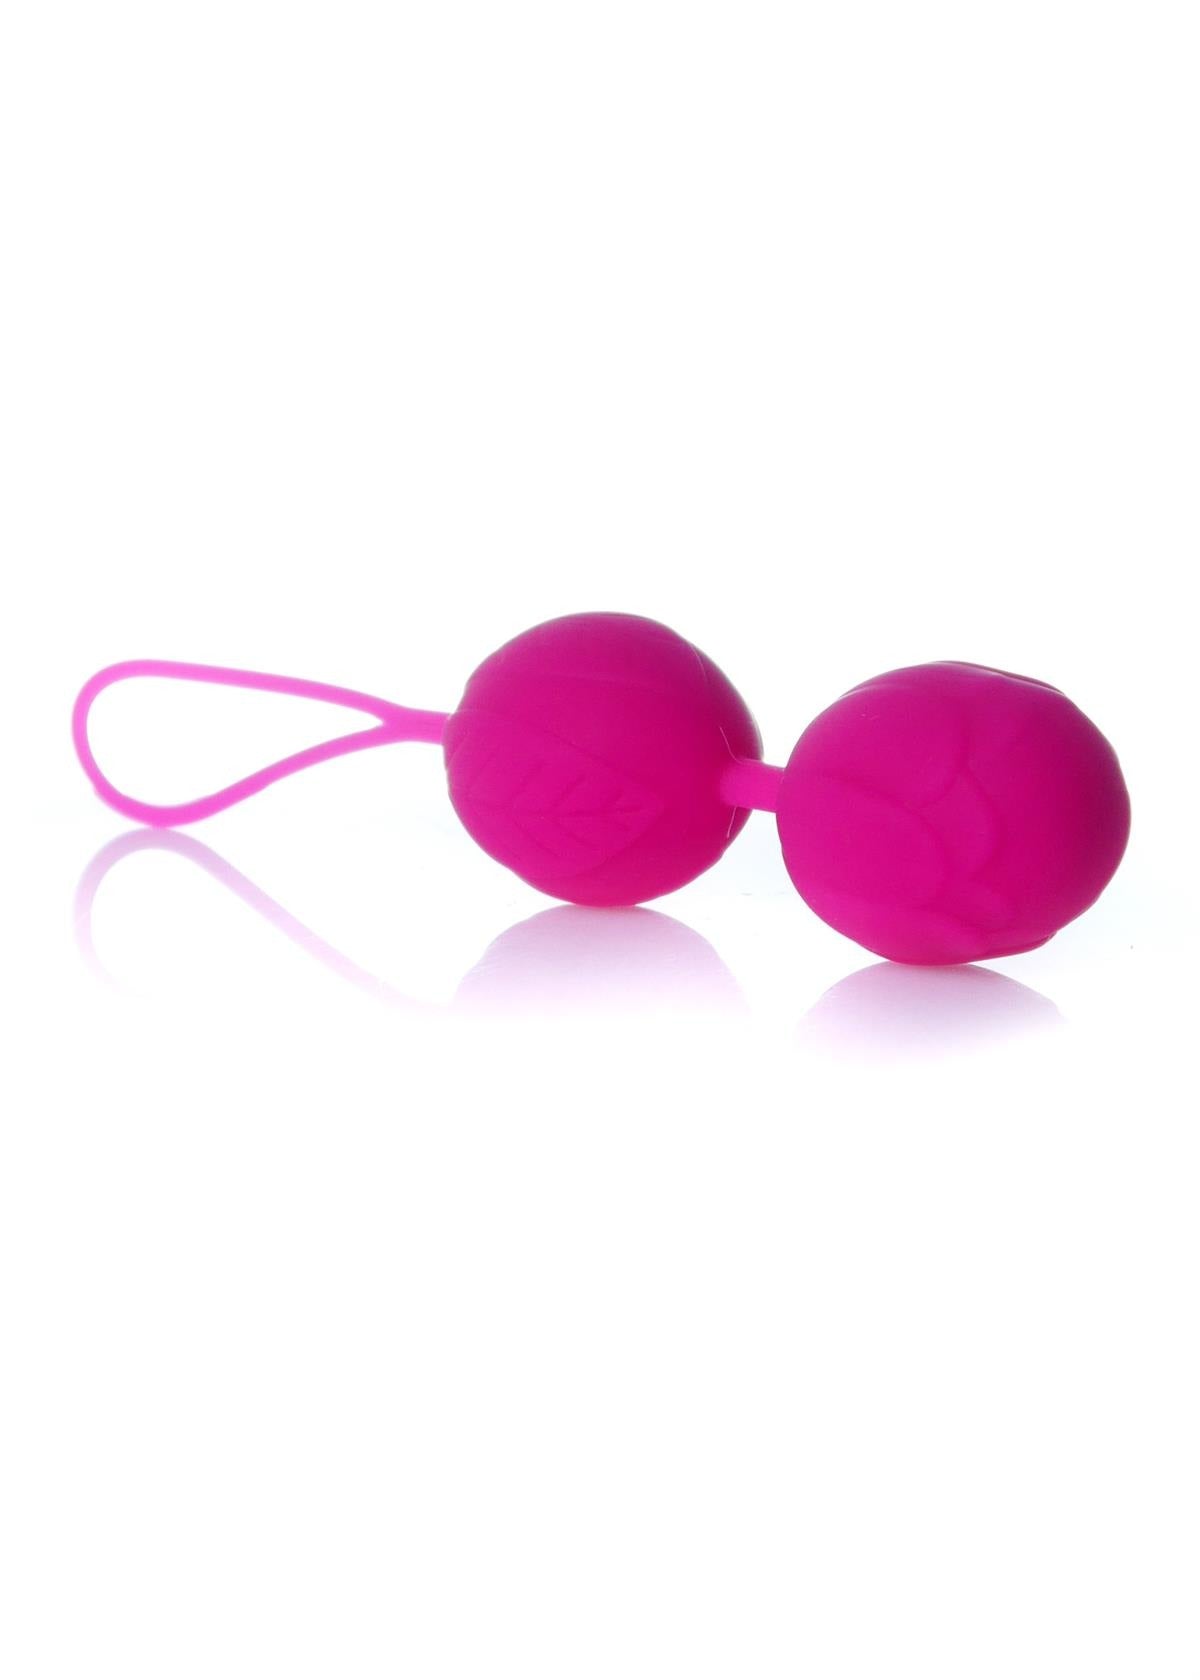 Bossoftoys - 67-00070 - Silicone Kegal Balls - duo Geisha ball - Pink - Dia 3,2 cm -  Clear box